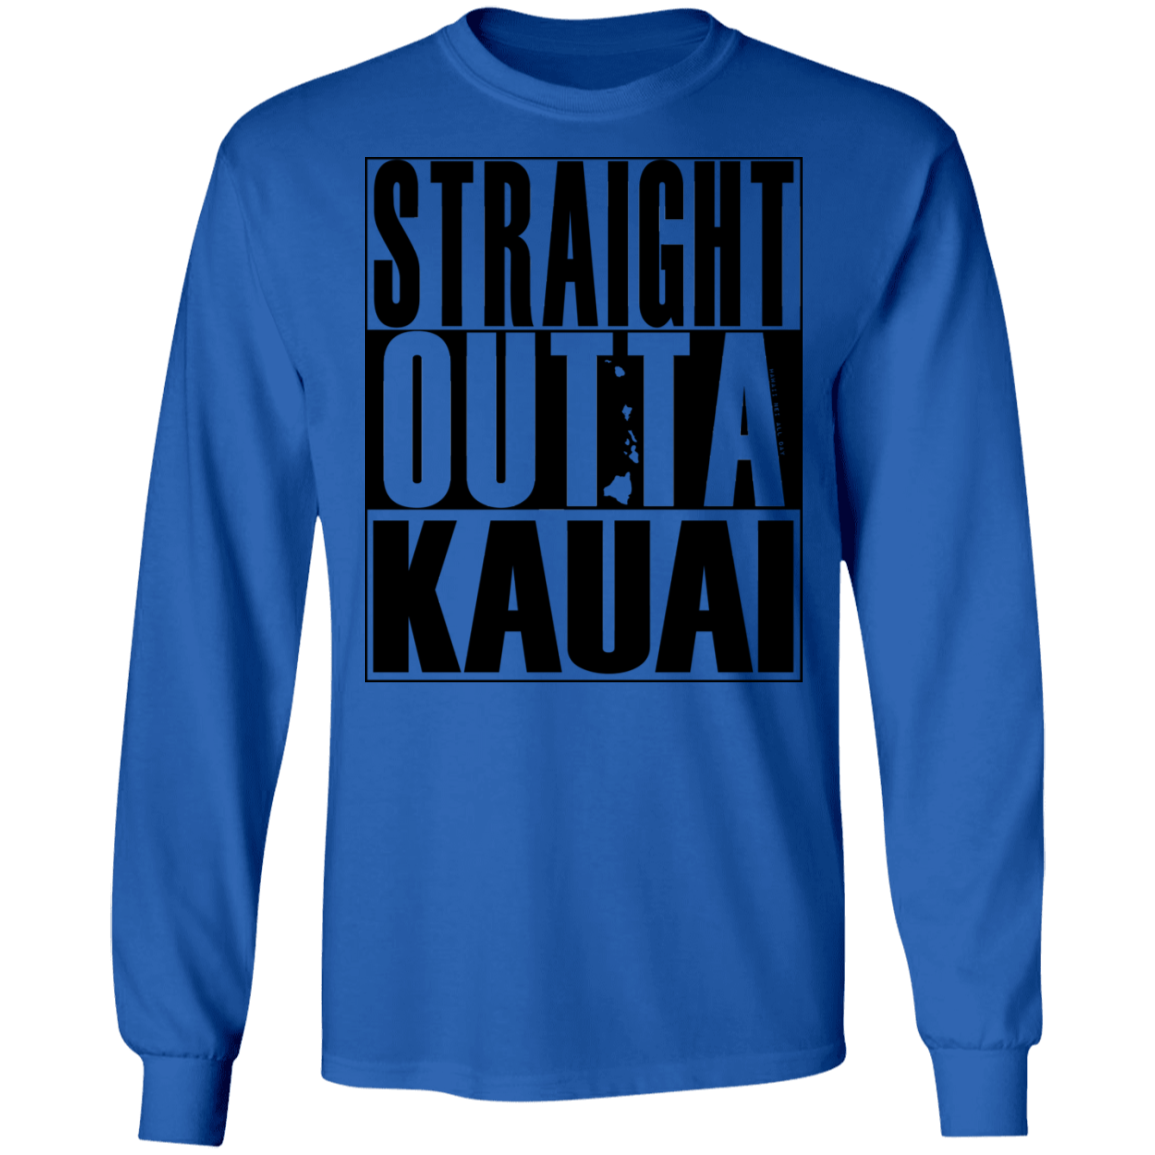 Straight Outta Kauai(black ink) LS T-Shirt